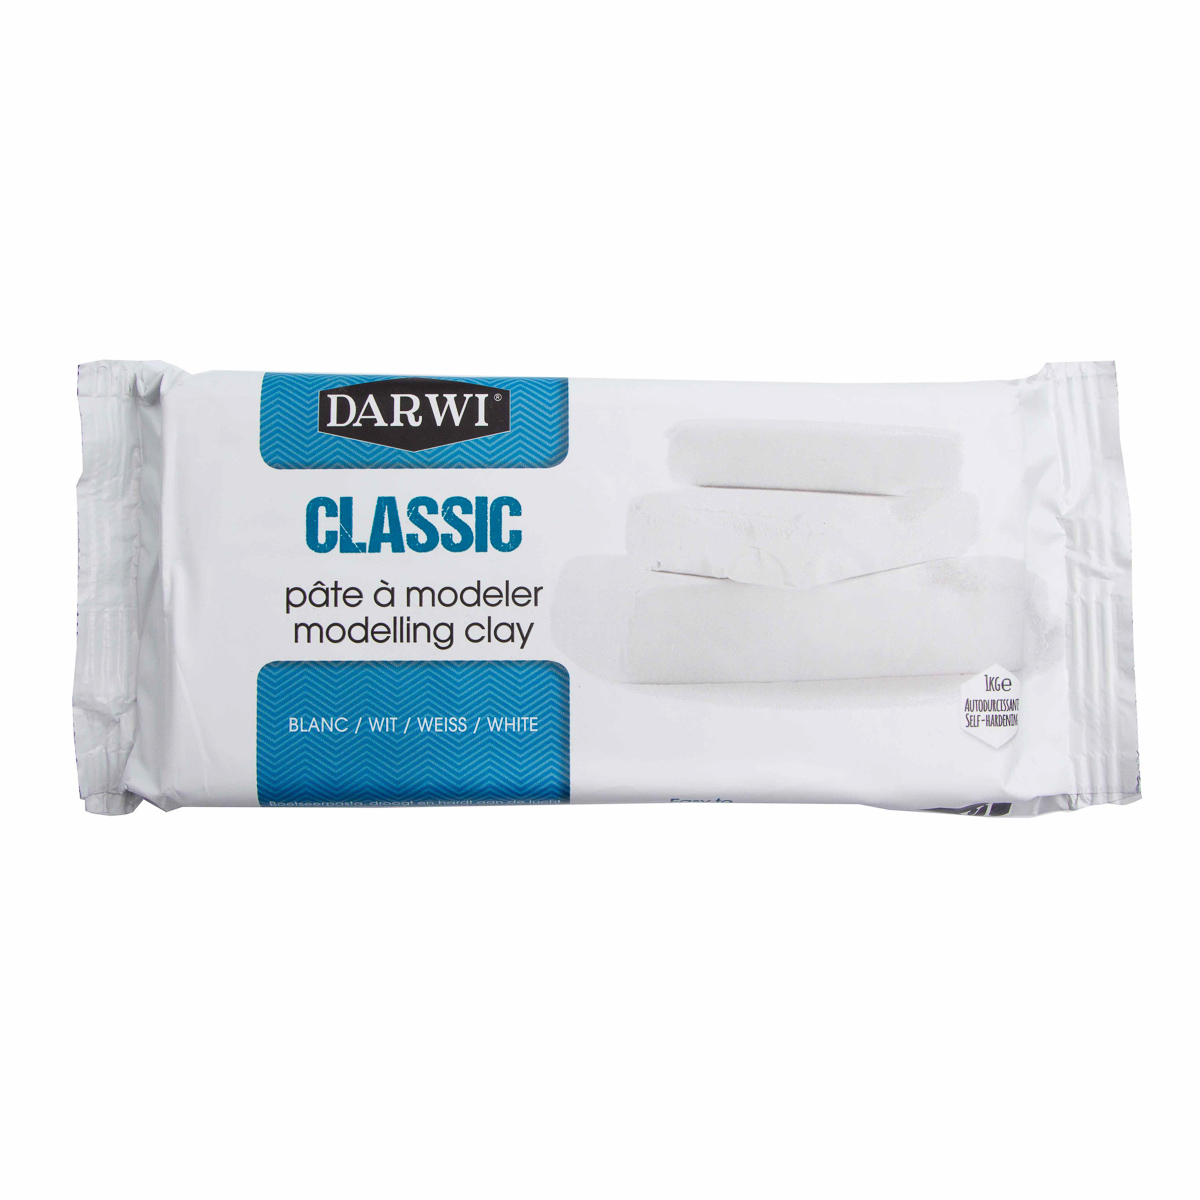 Паста для моделирования Darwi Classic, белая, 1 кг Darwi паста для моделирования darwi classic белая 1 кг darwi